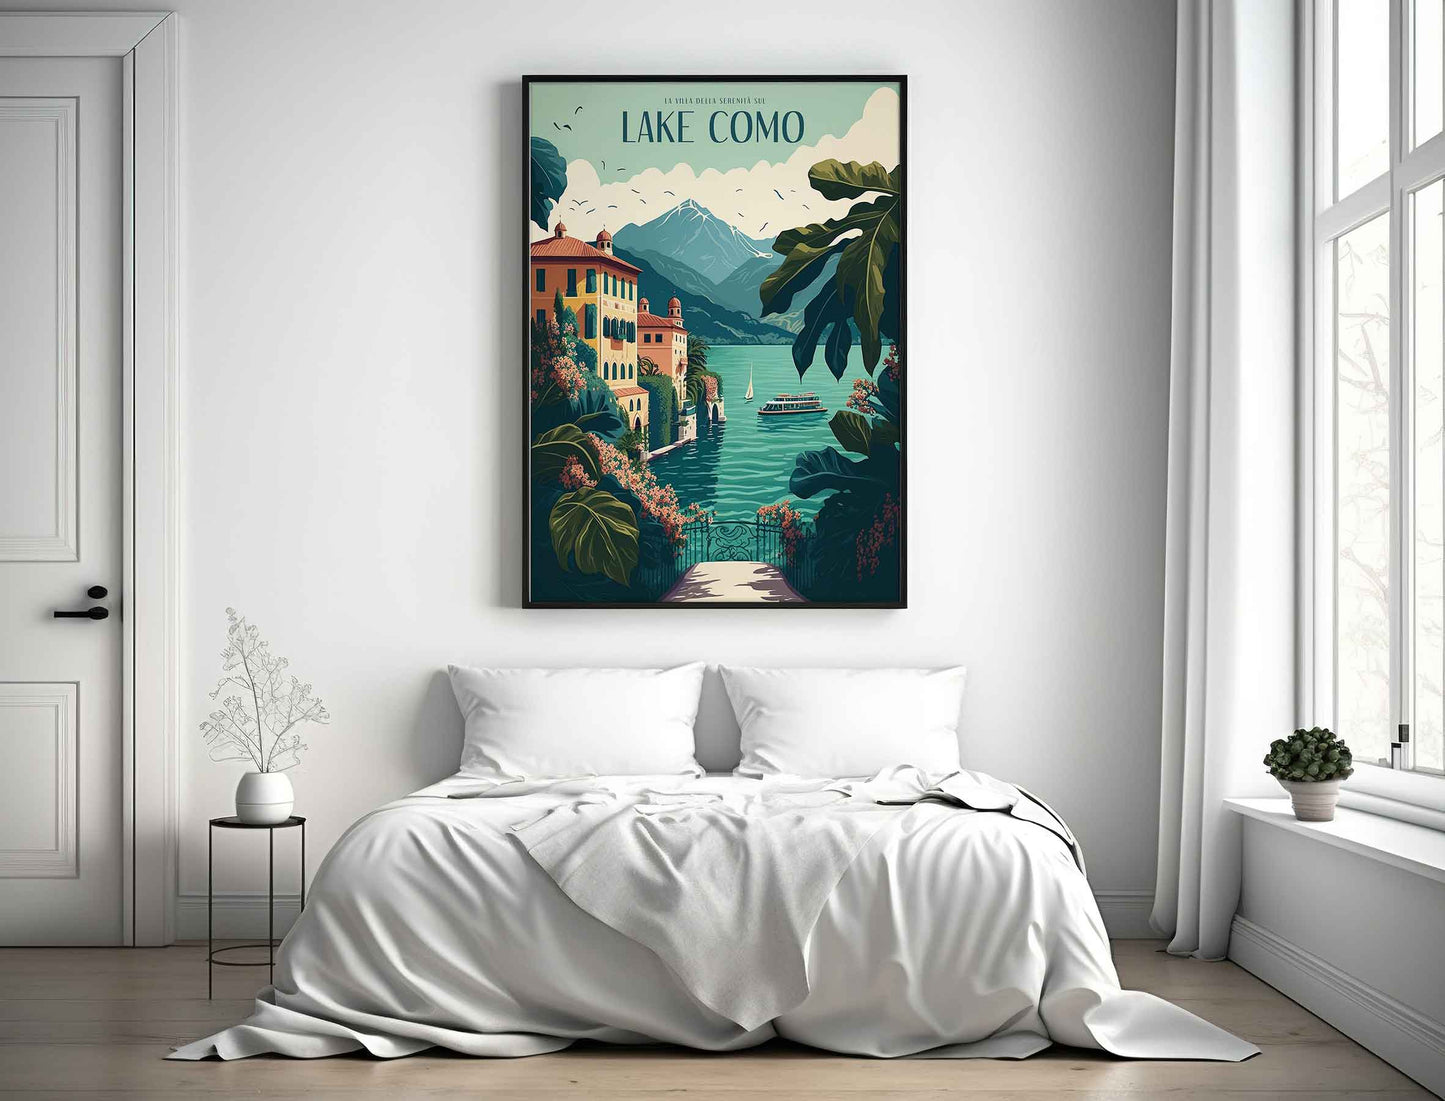 Framed Image of Retro Lake Como Italy Travel Illustration Wall Art Poster Print